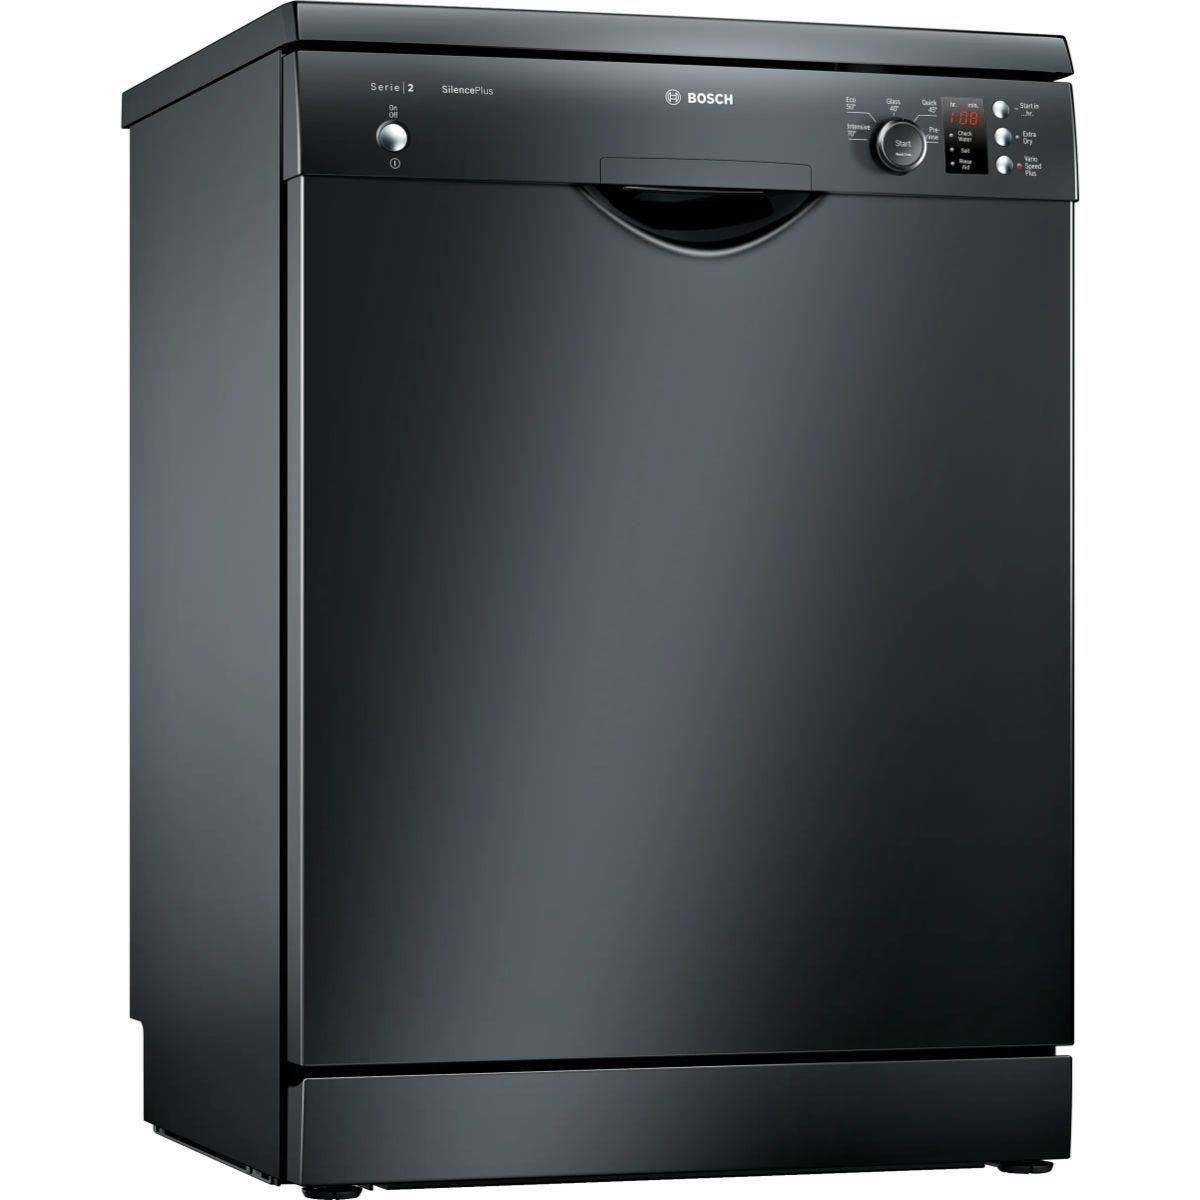 Bosch Digital Dishwasher, 12 Place Settings, 5 Programs, Black - SMS25AB00G